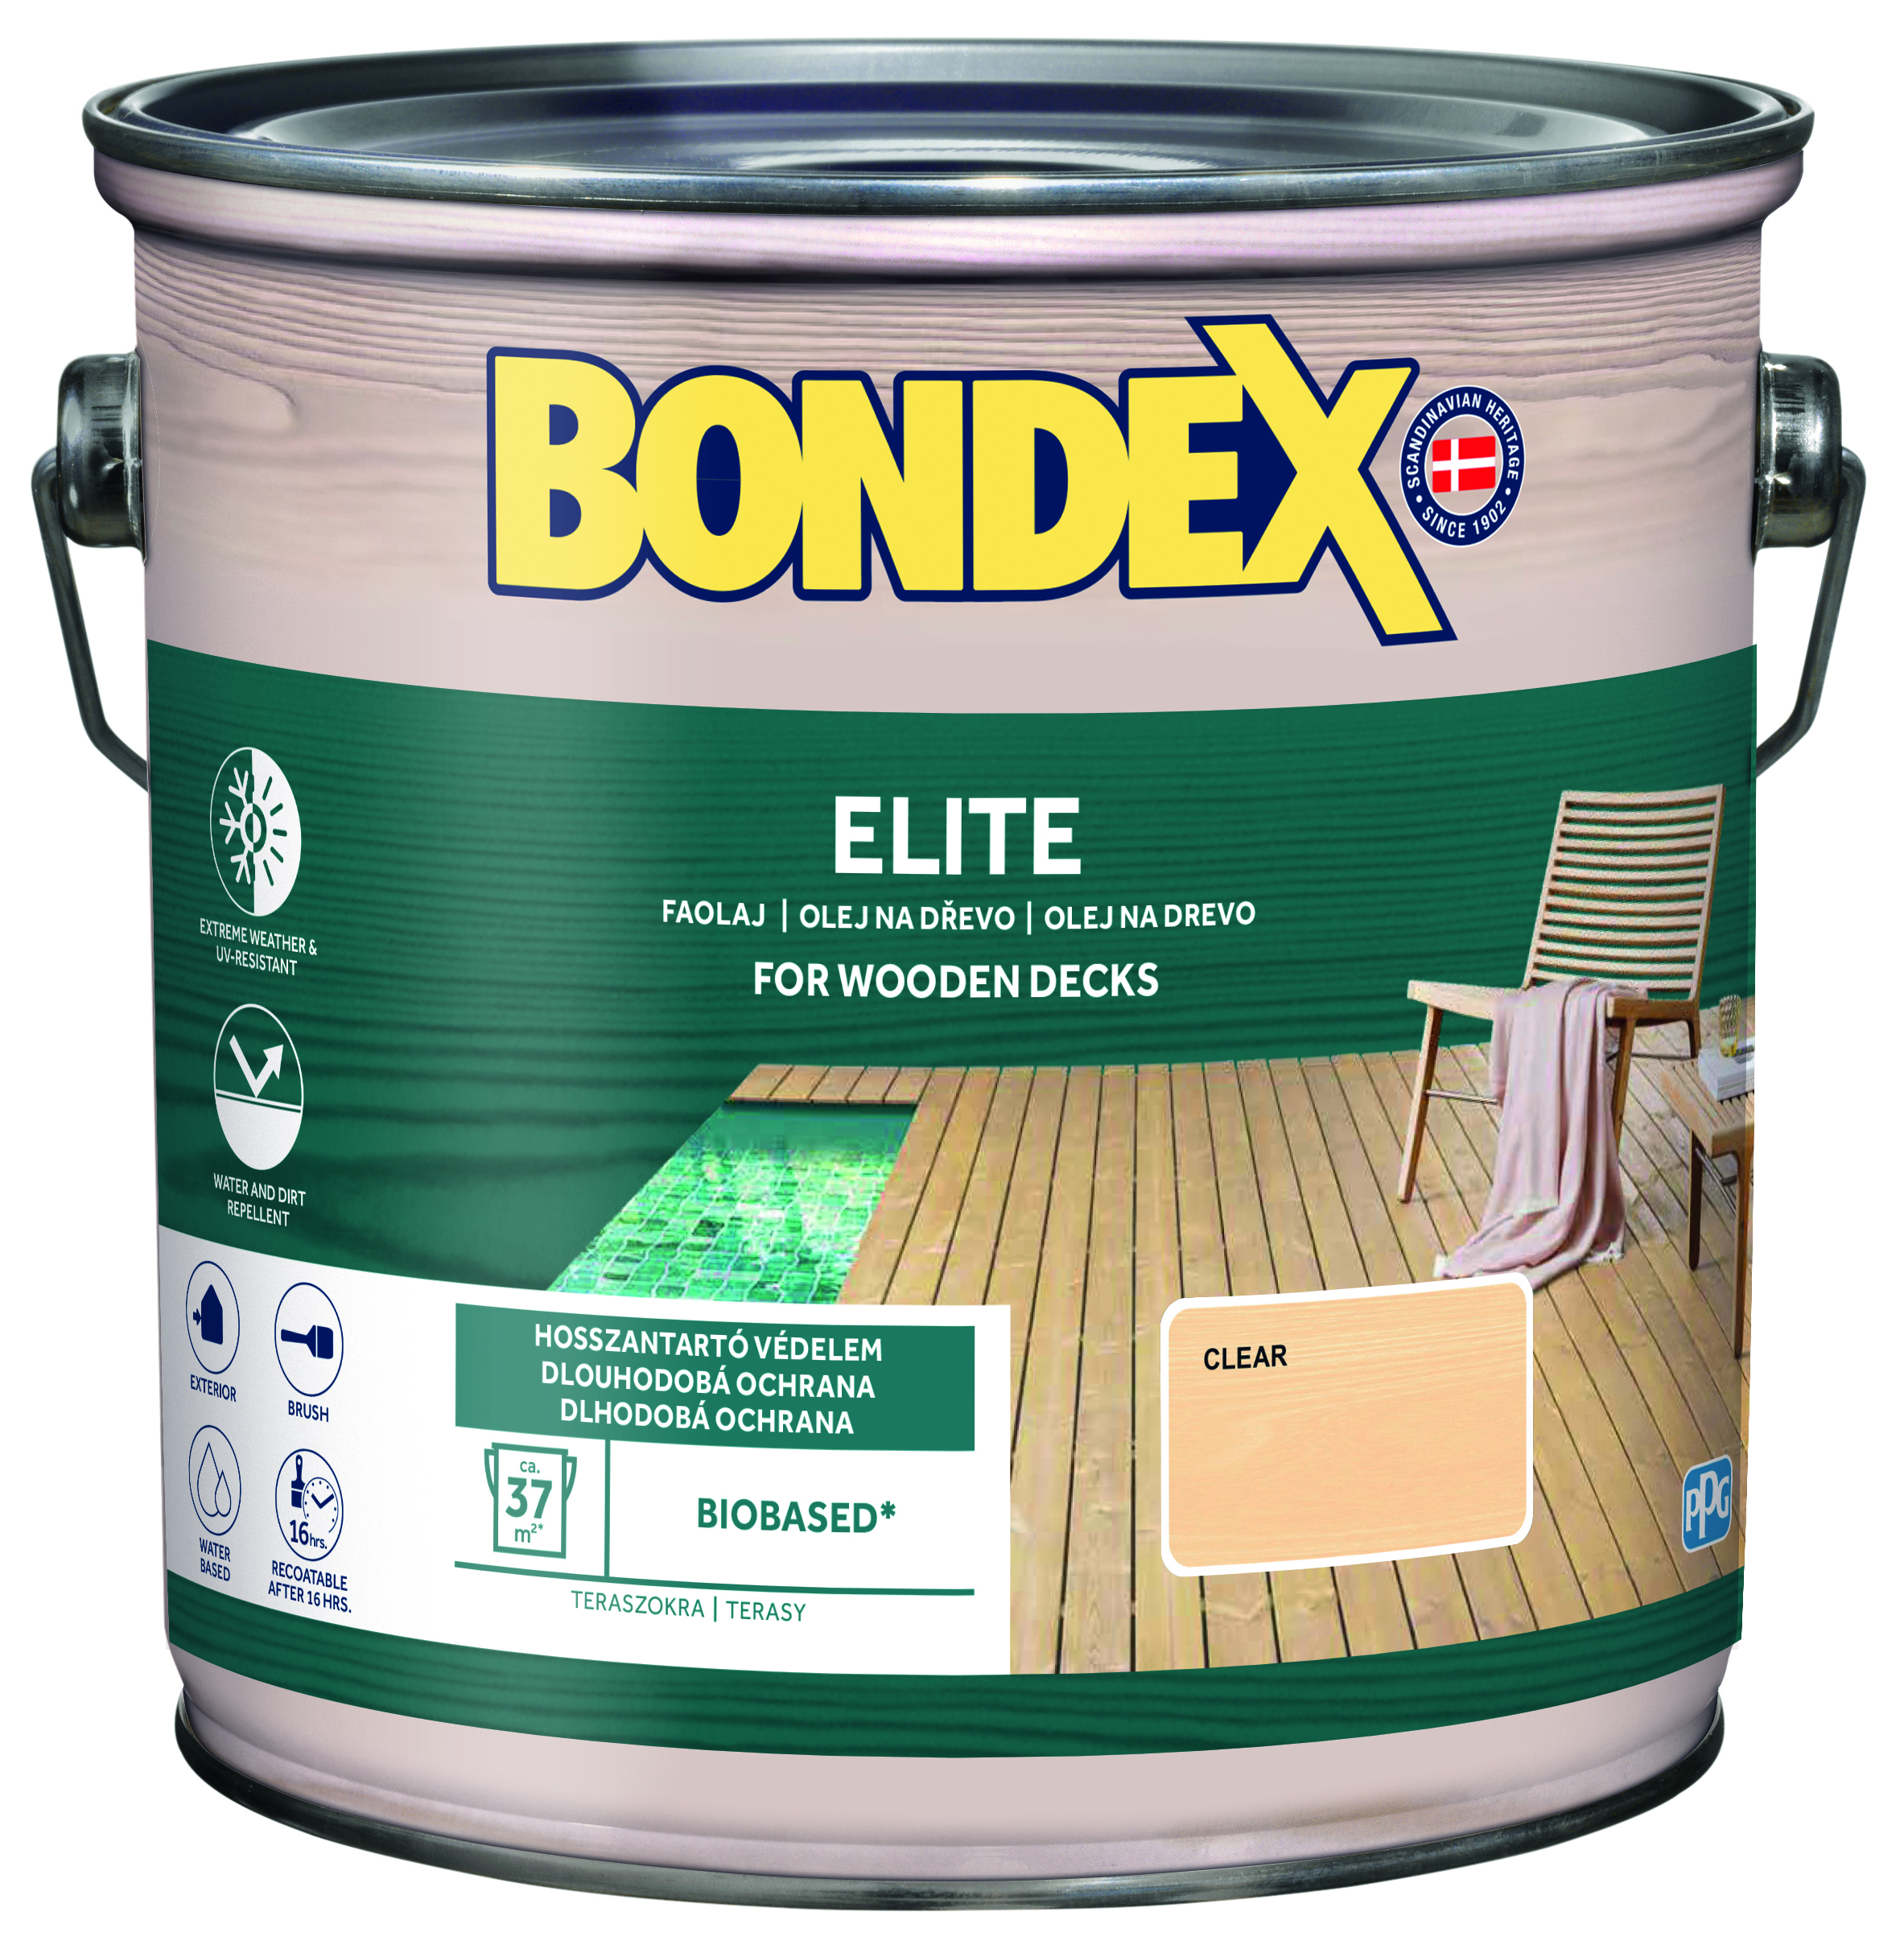 BONDEX Elite